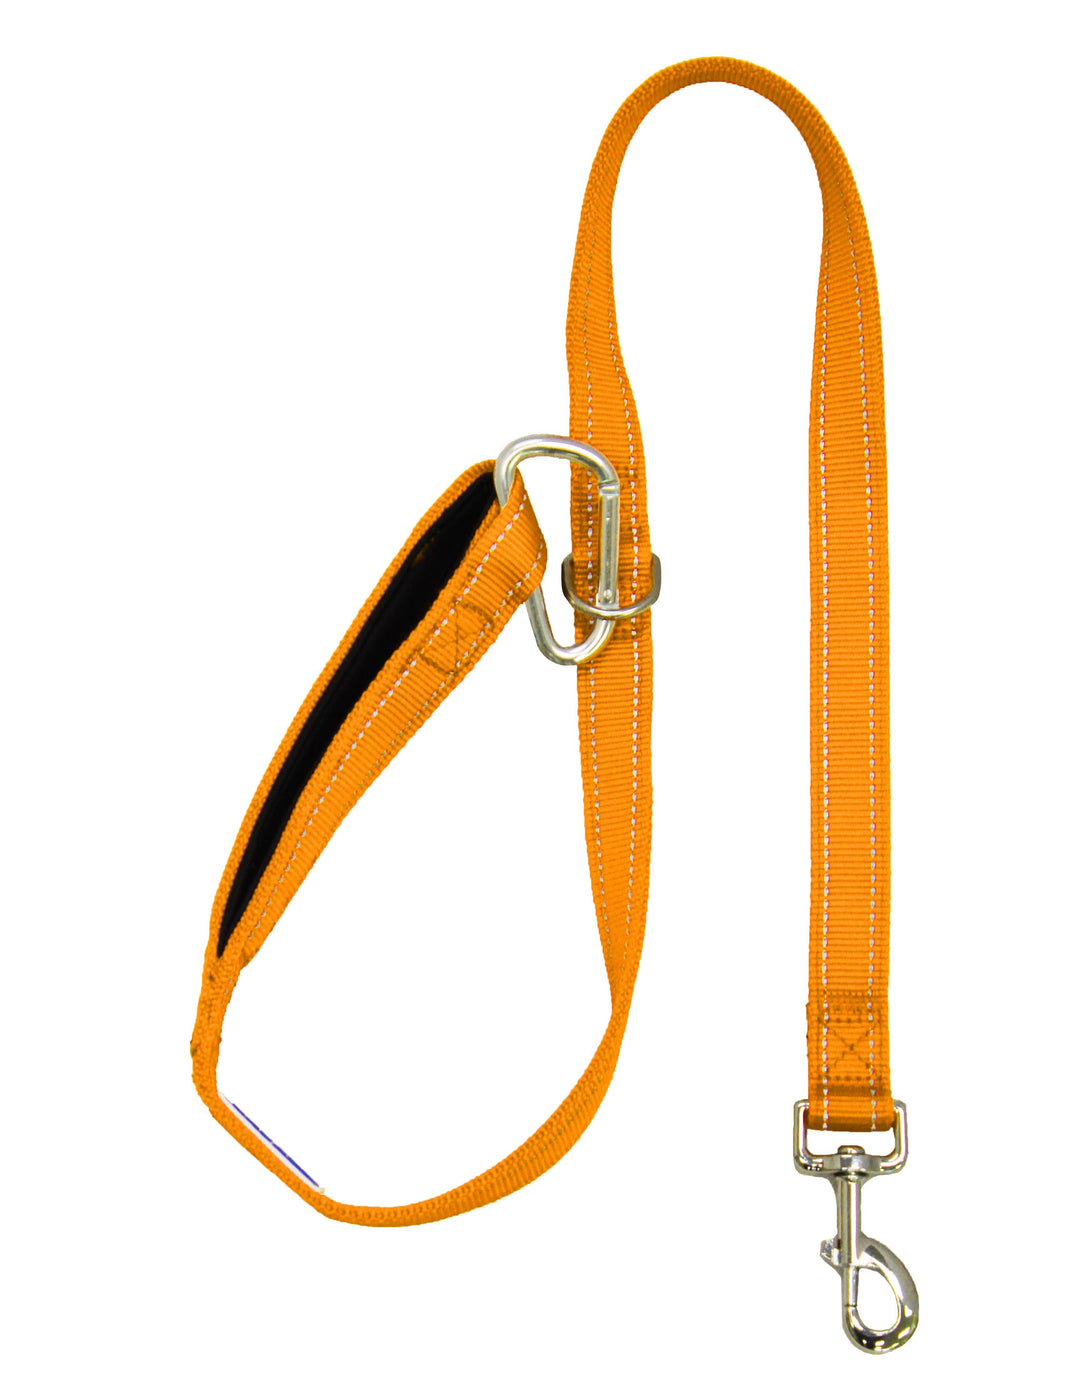 Hudson Bay Dog Leash | Blaze Orange